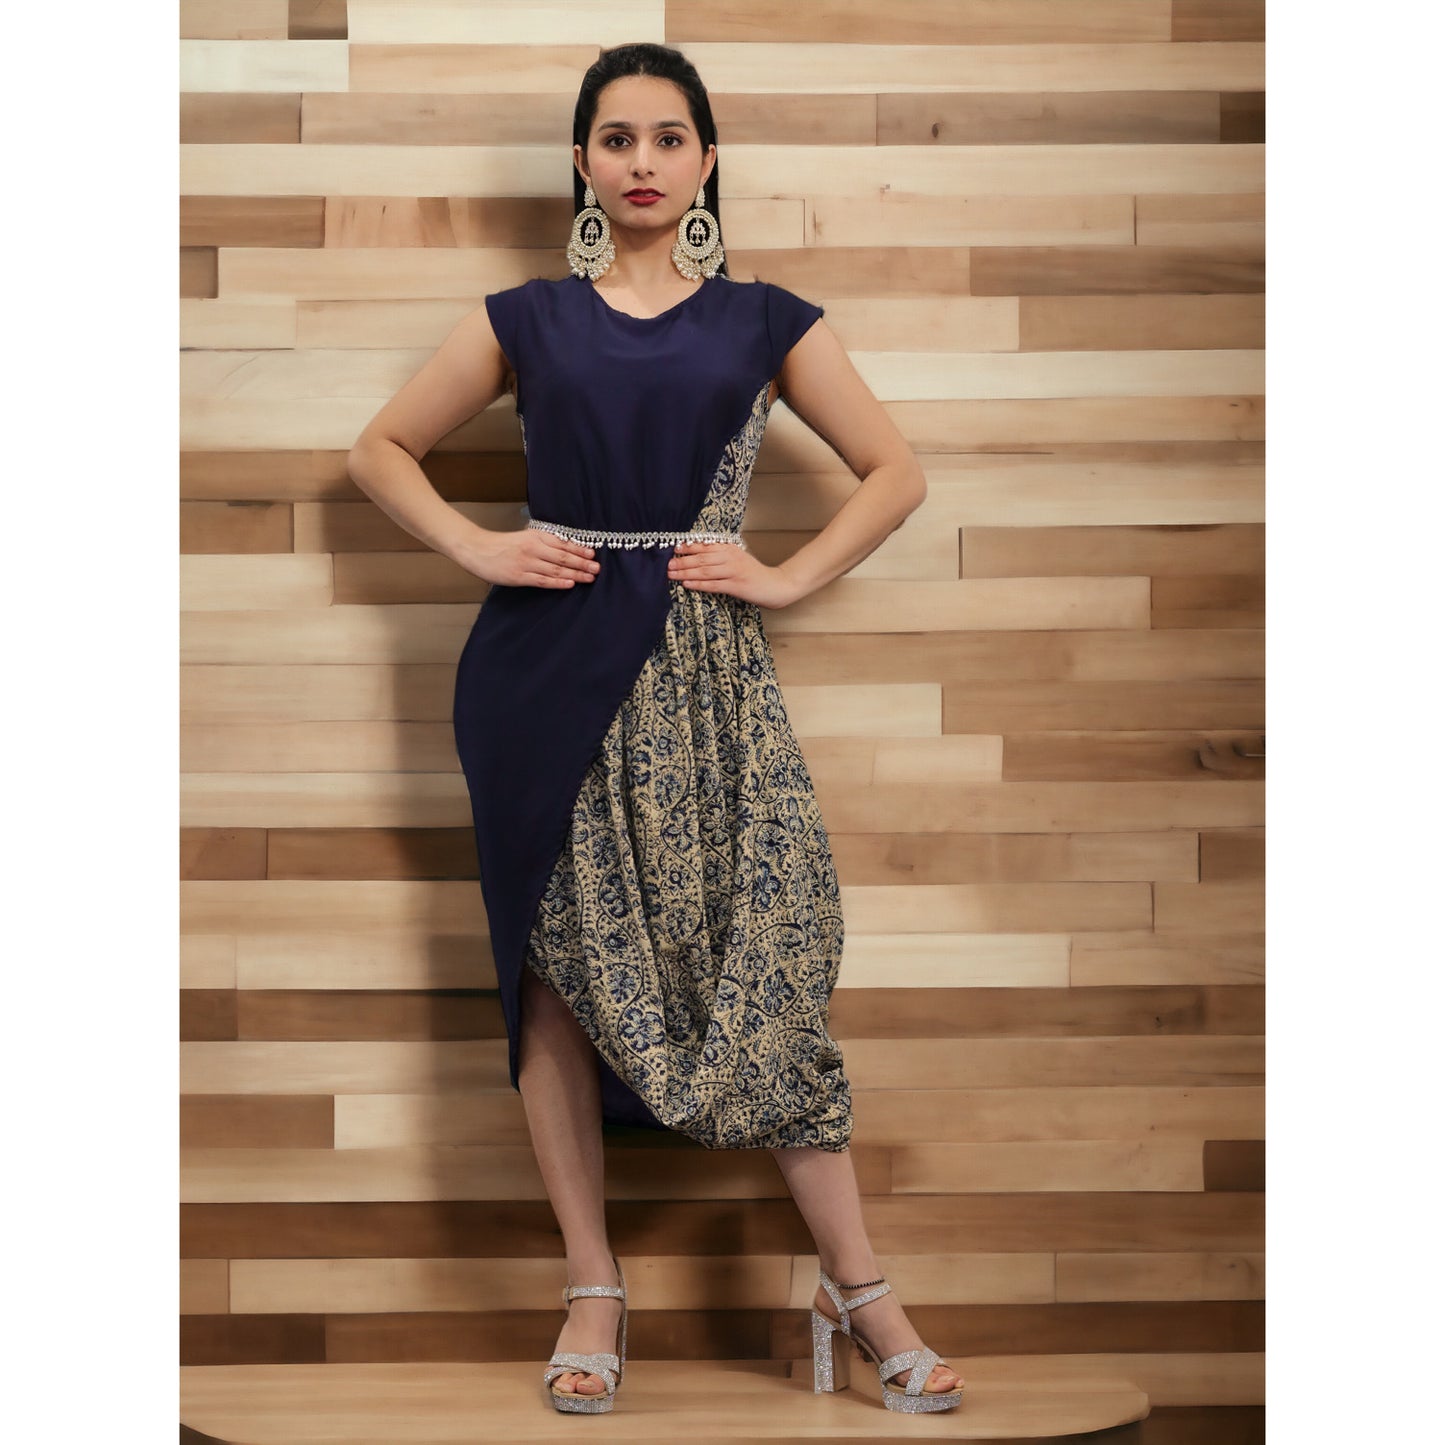 Elegant Cowl pattern drape style dress in modal cotton and exquisite Kalamkari print